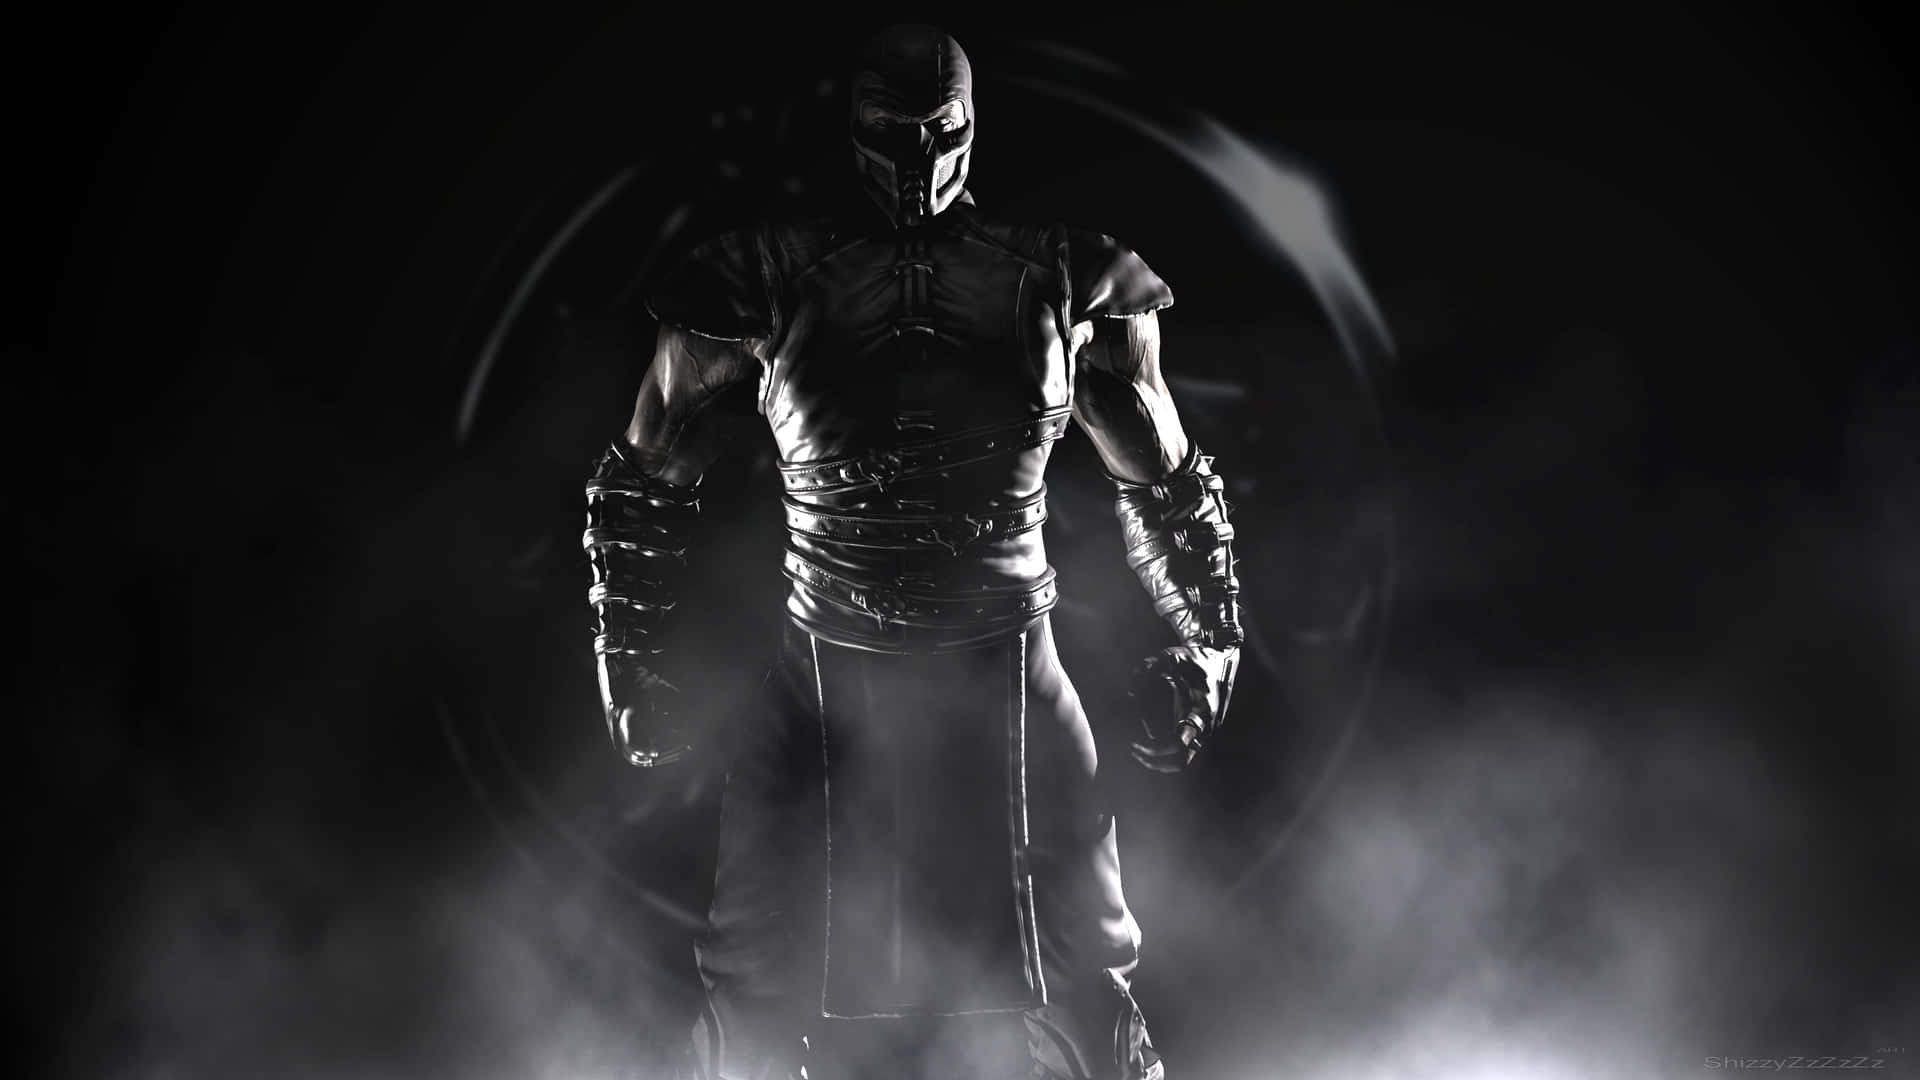 Image  Noob Saibot, the iconic ninja warrior from Mortal Kombat Wallpaper